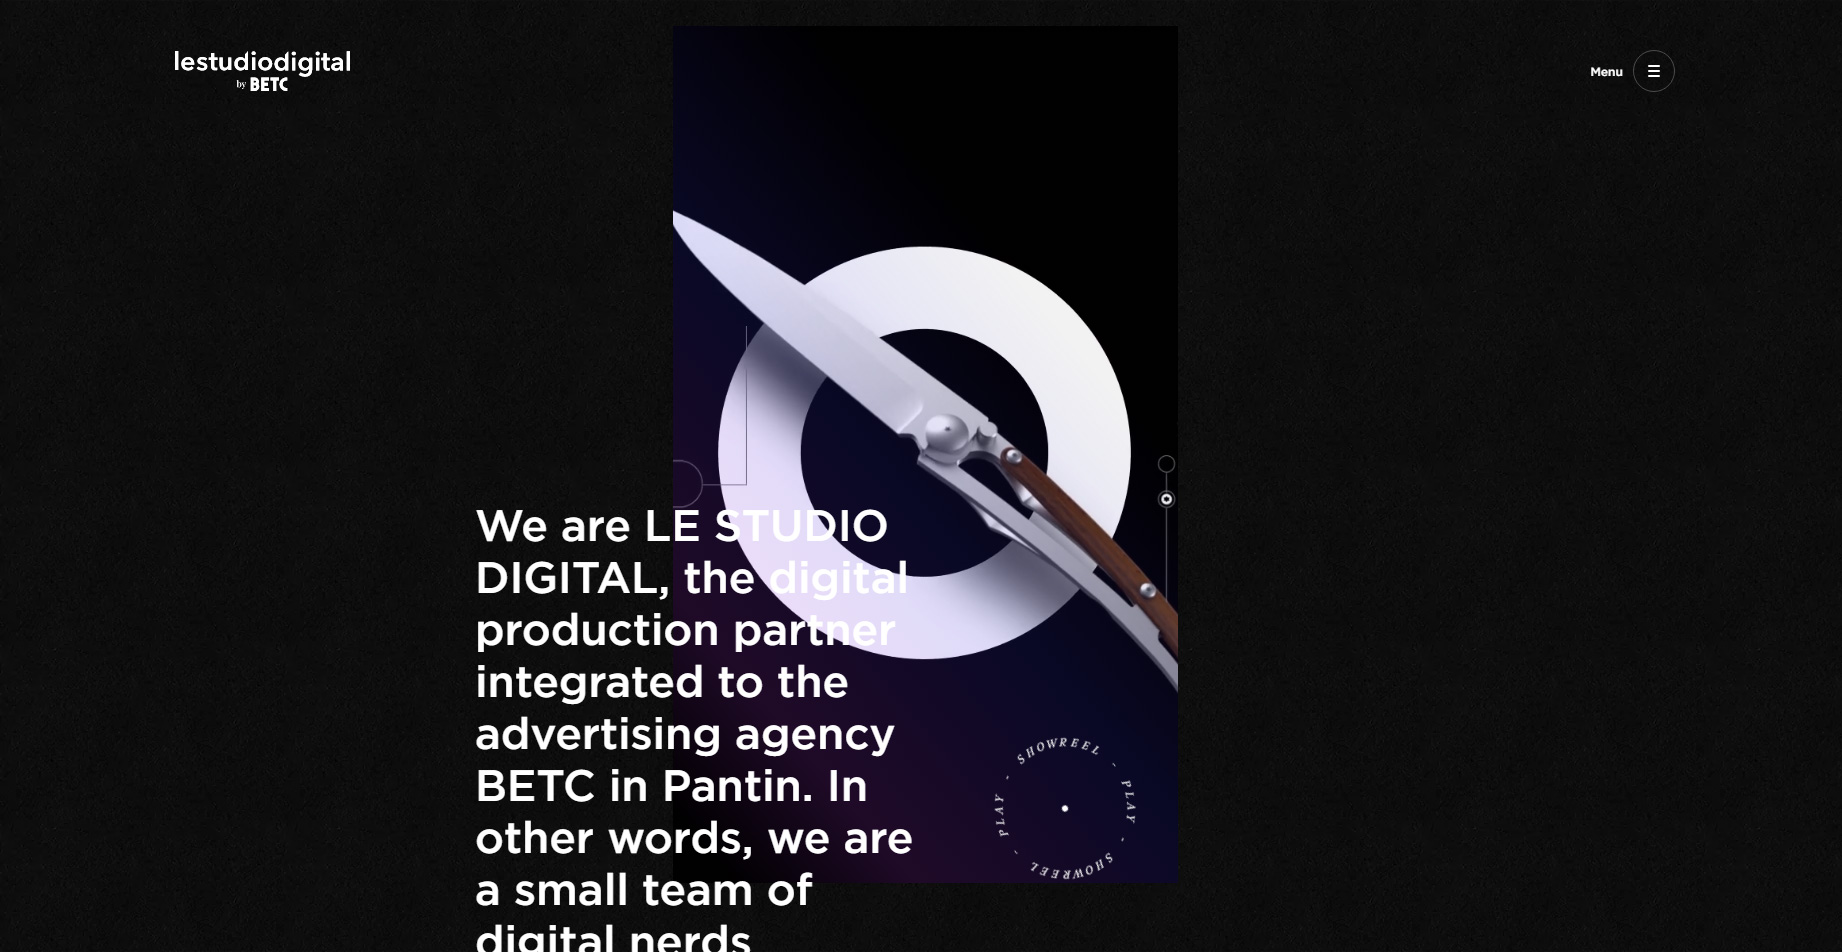 Le Studio Digital - Website of the Day